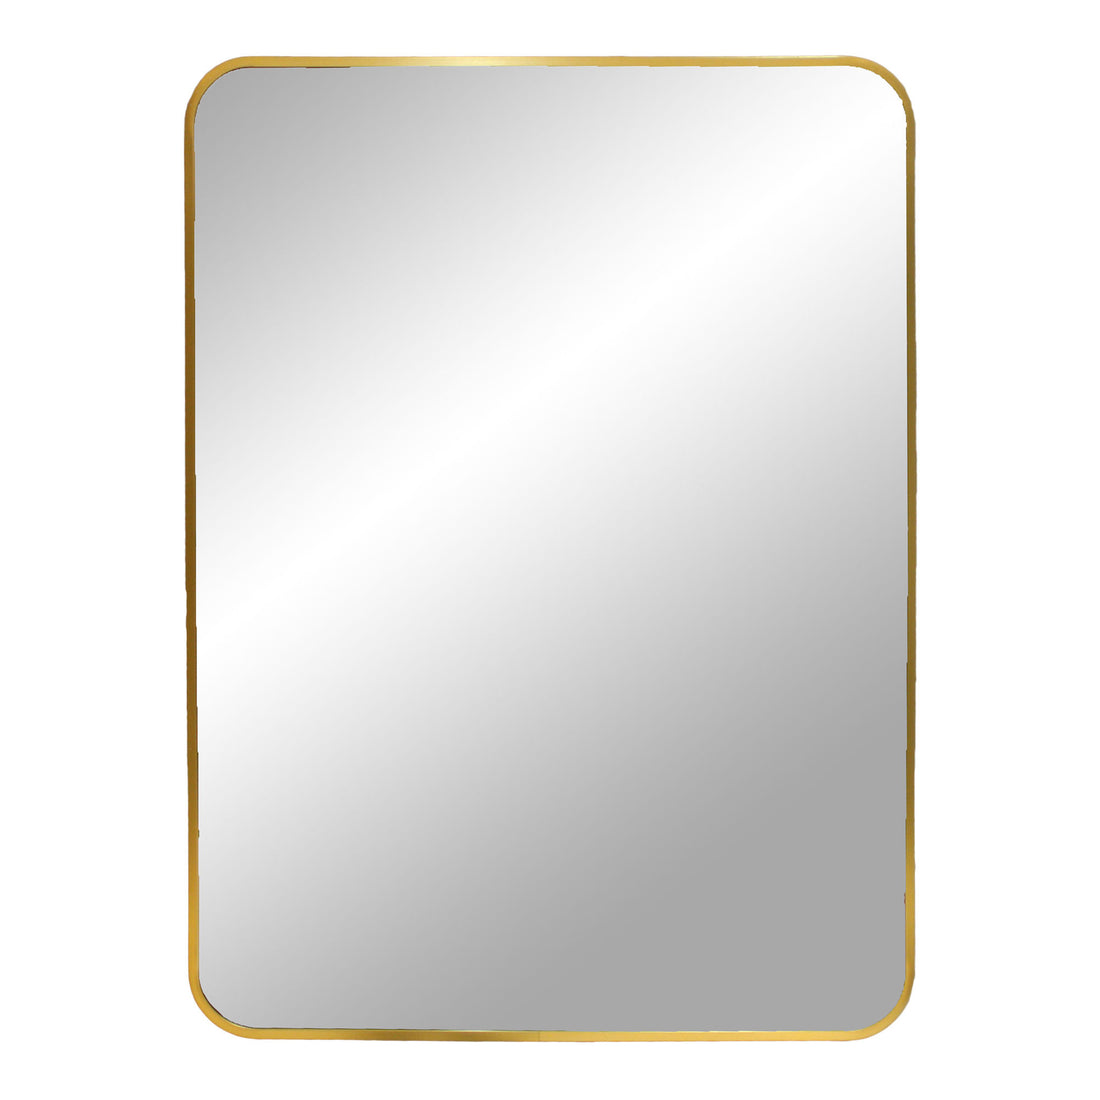 Madrid mirror - mirror in aluminum, brass look, 50x70 cm - 1 - pcs